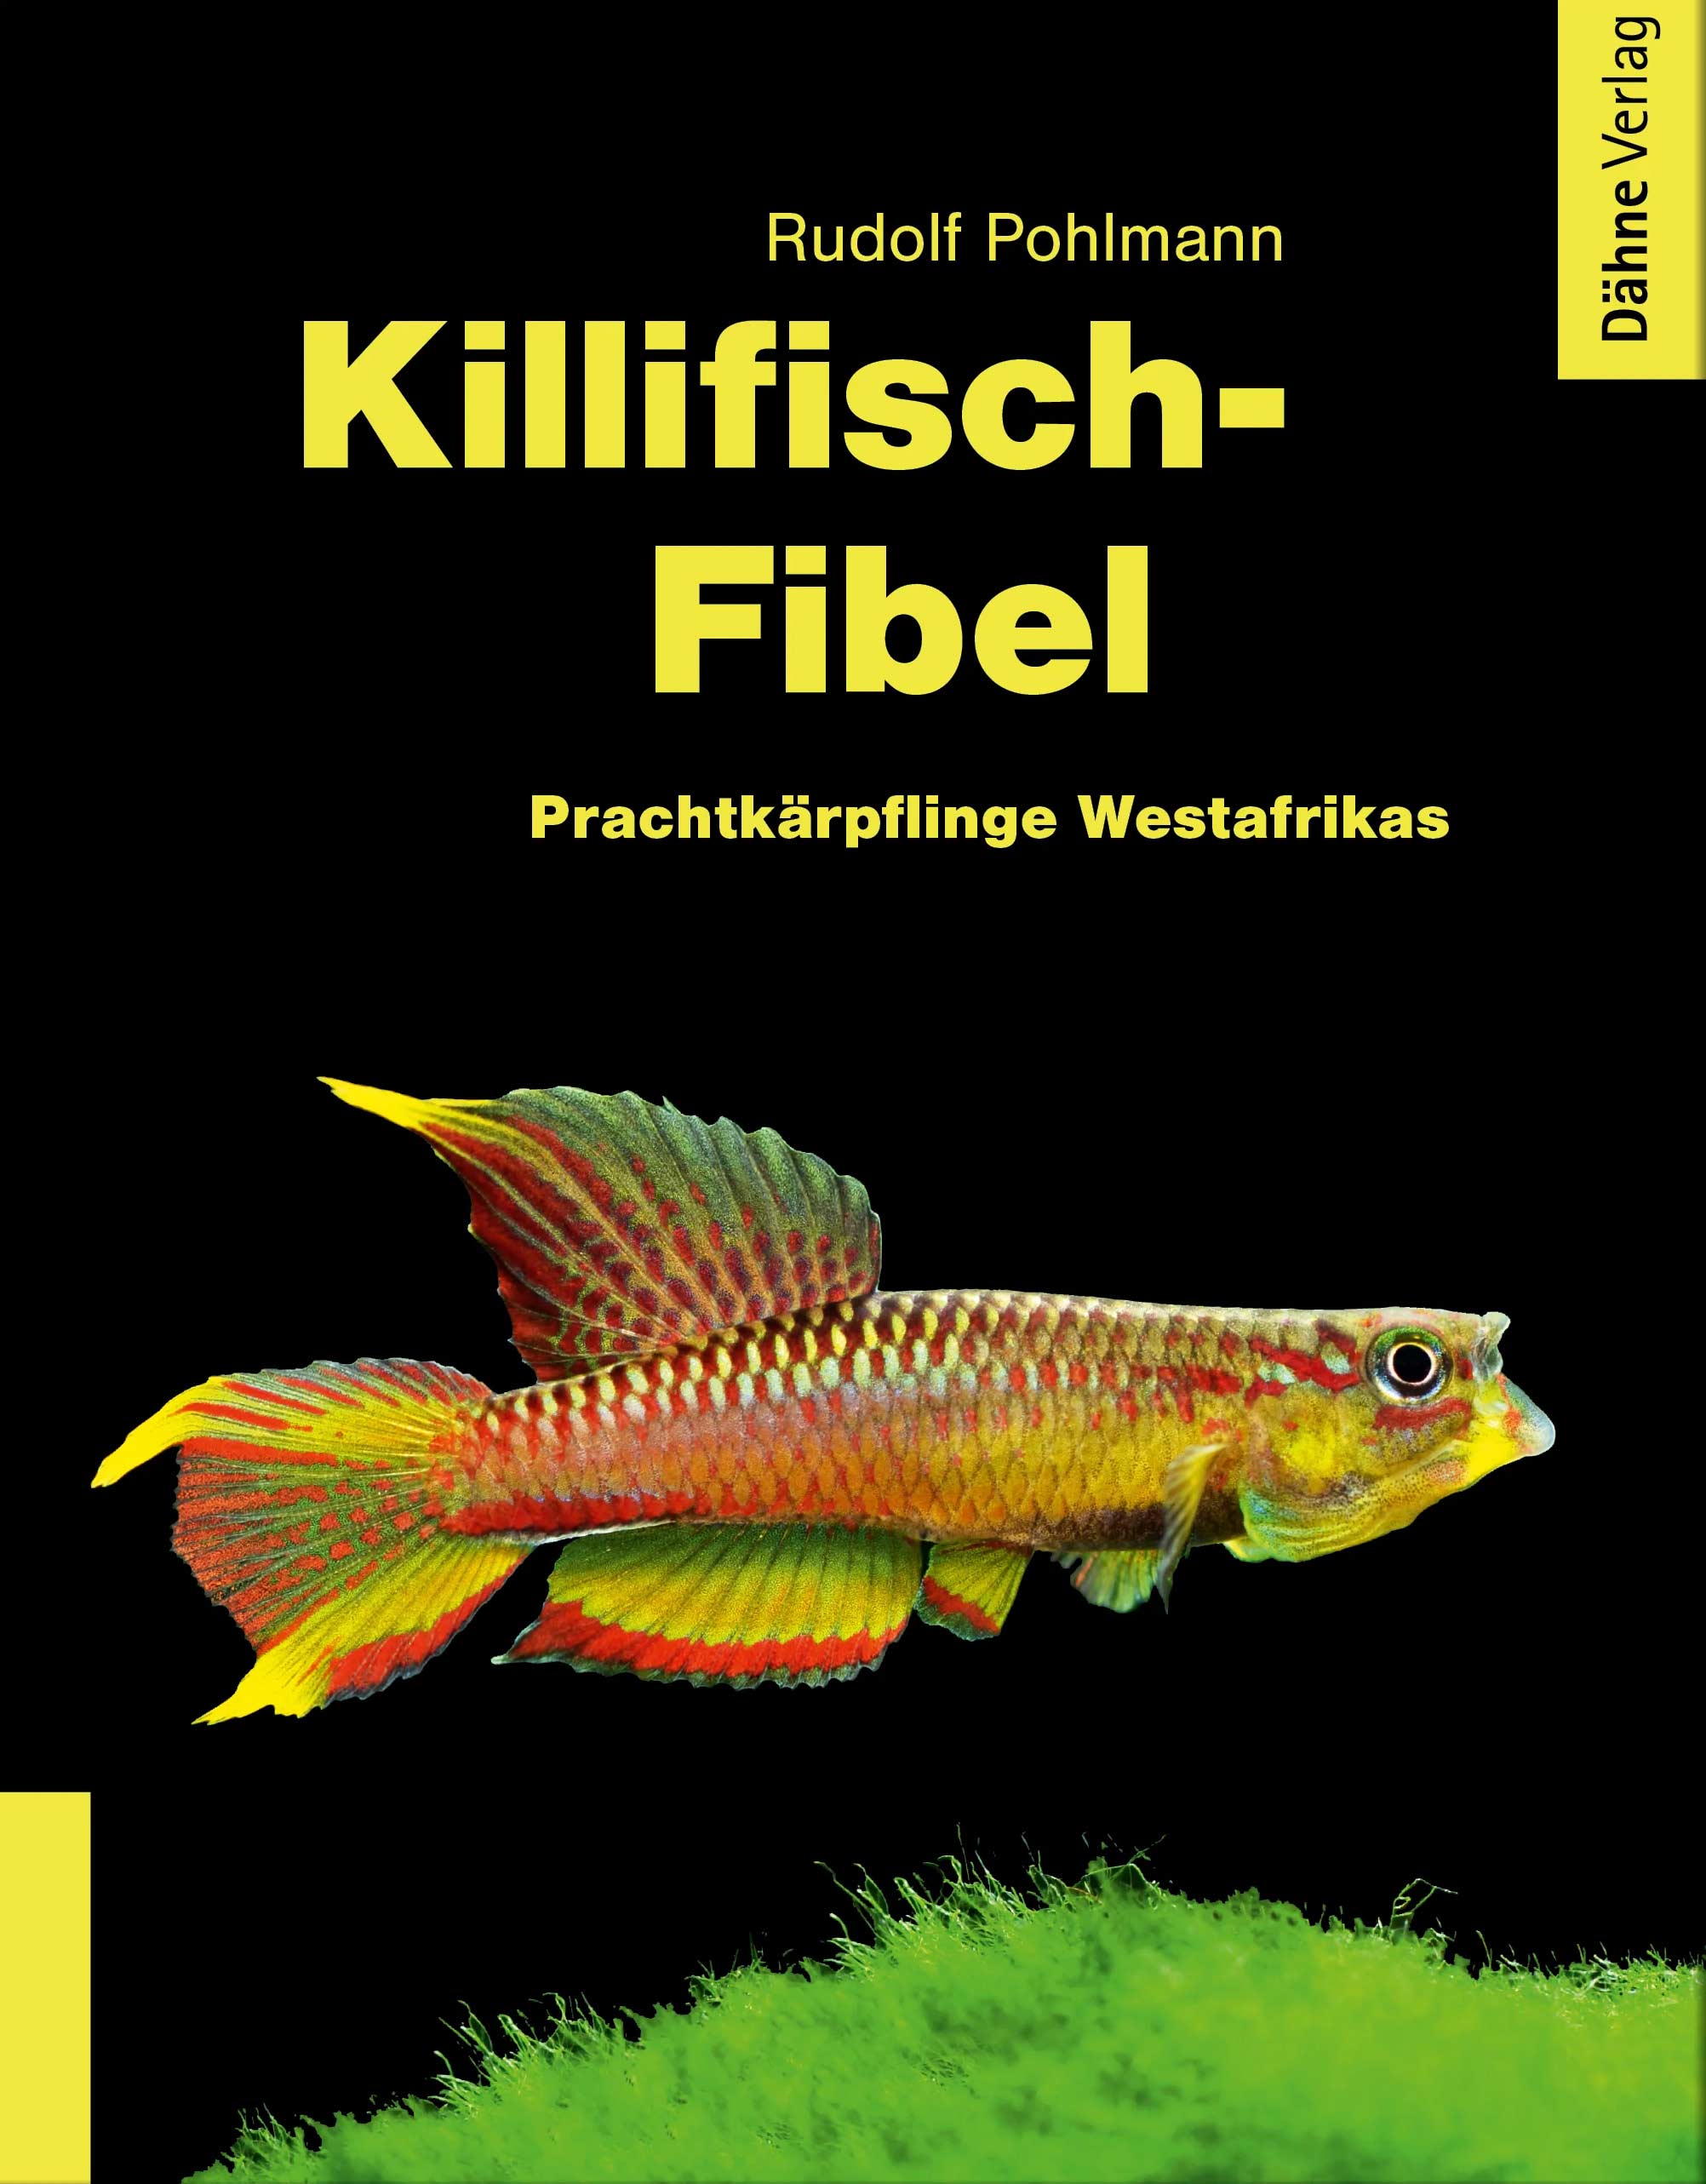 Killifisch-Fibel / Rudolf Pohlmann